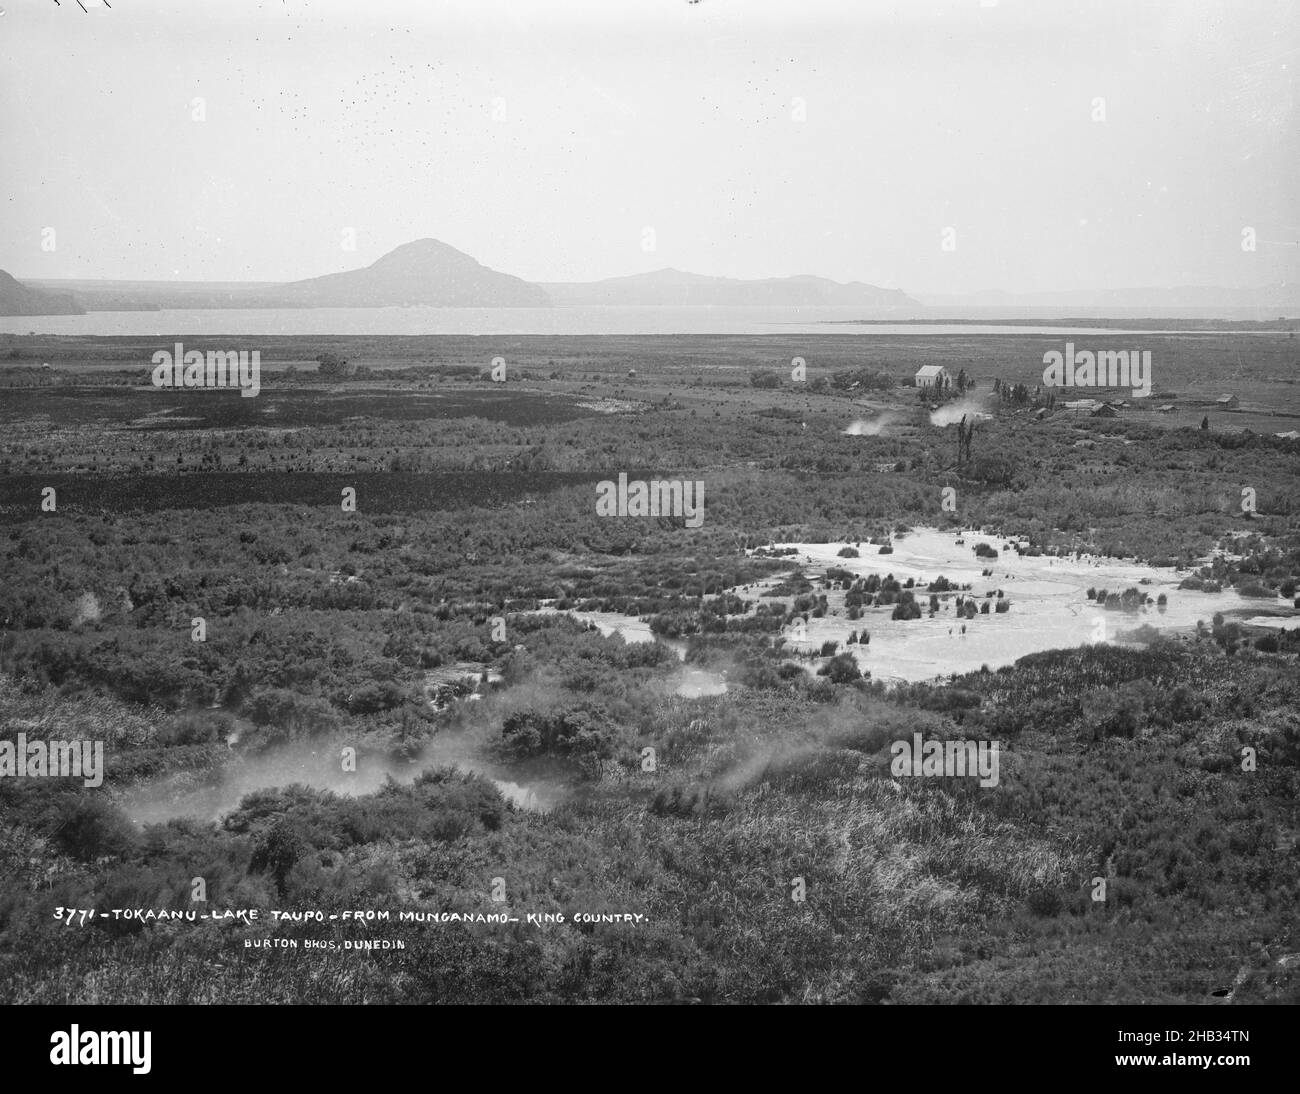 Tokaanu, Lago Taupo, da Munganamo, King Country, Burton Brothers studio, Studio fotografico, Nuova Zelanda, fotografia in bianco e nero Foto Stock